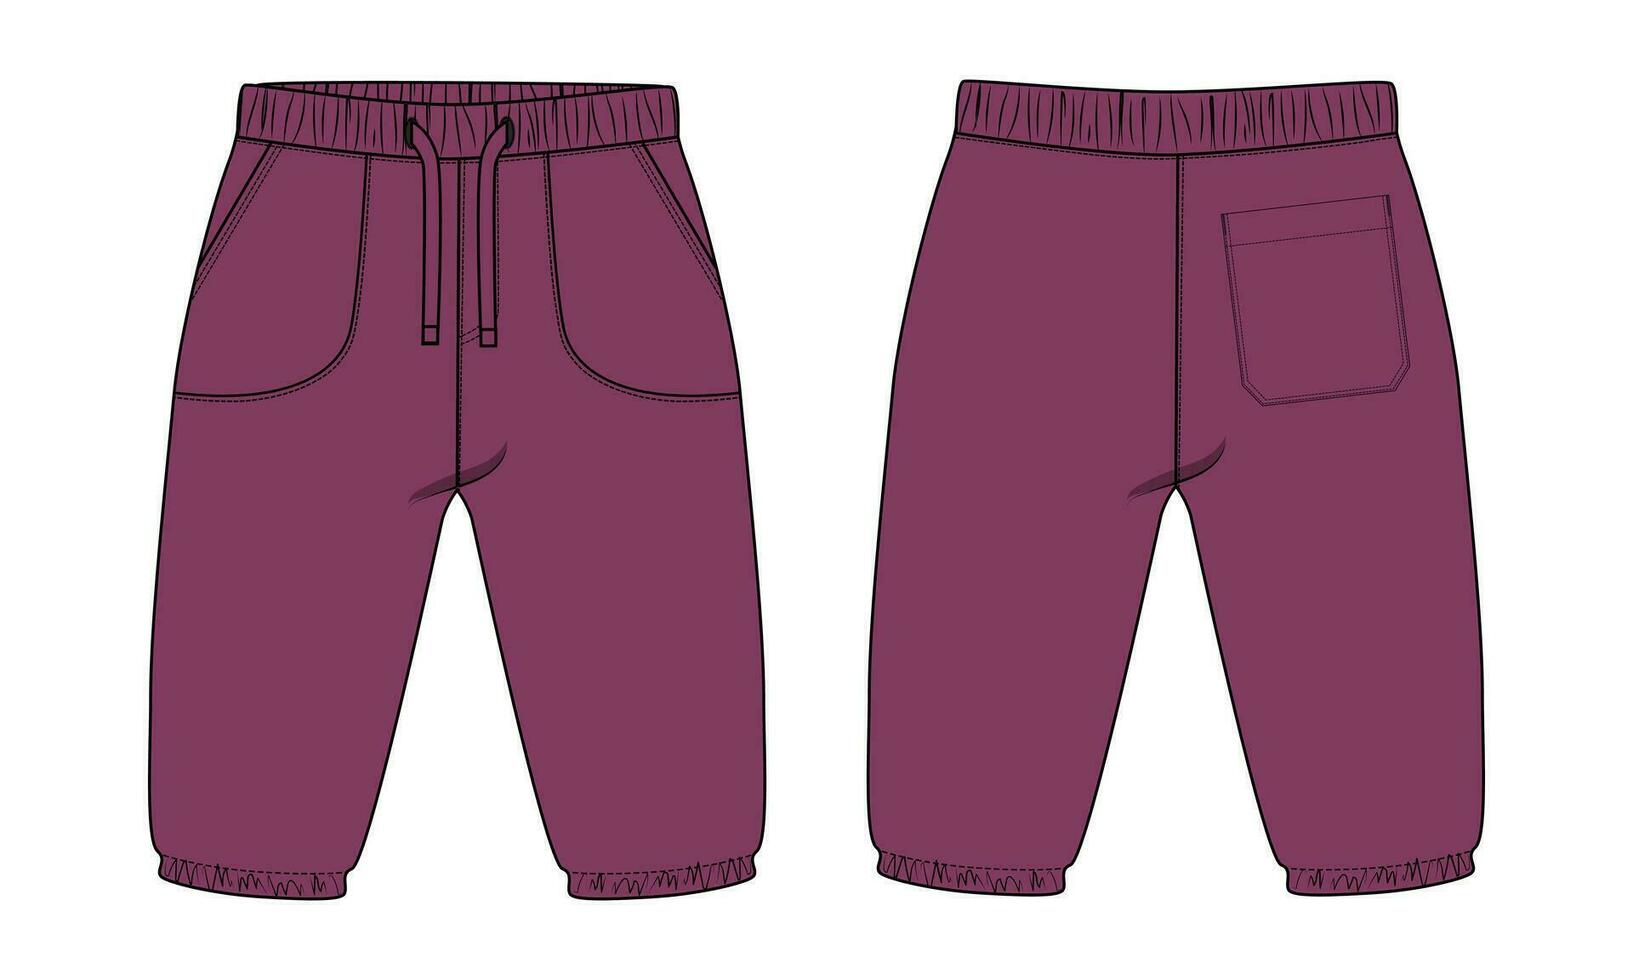 Sweatpants Fashion flat sketch vector illustration template For Kids. Apparel Clothing Design Mock up